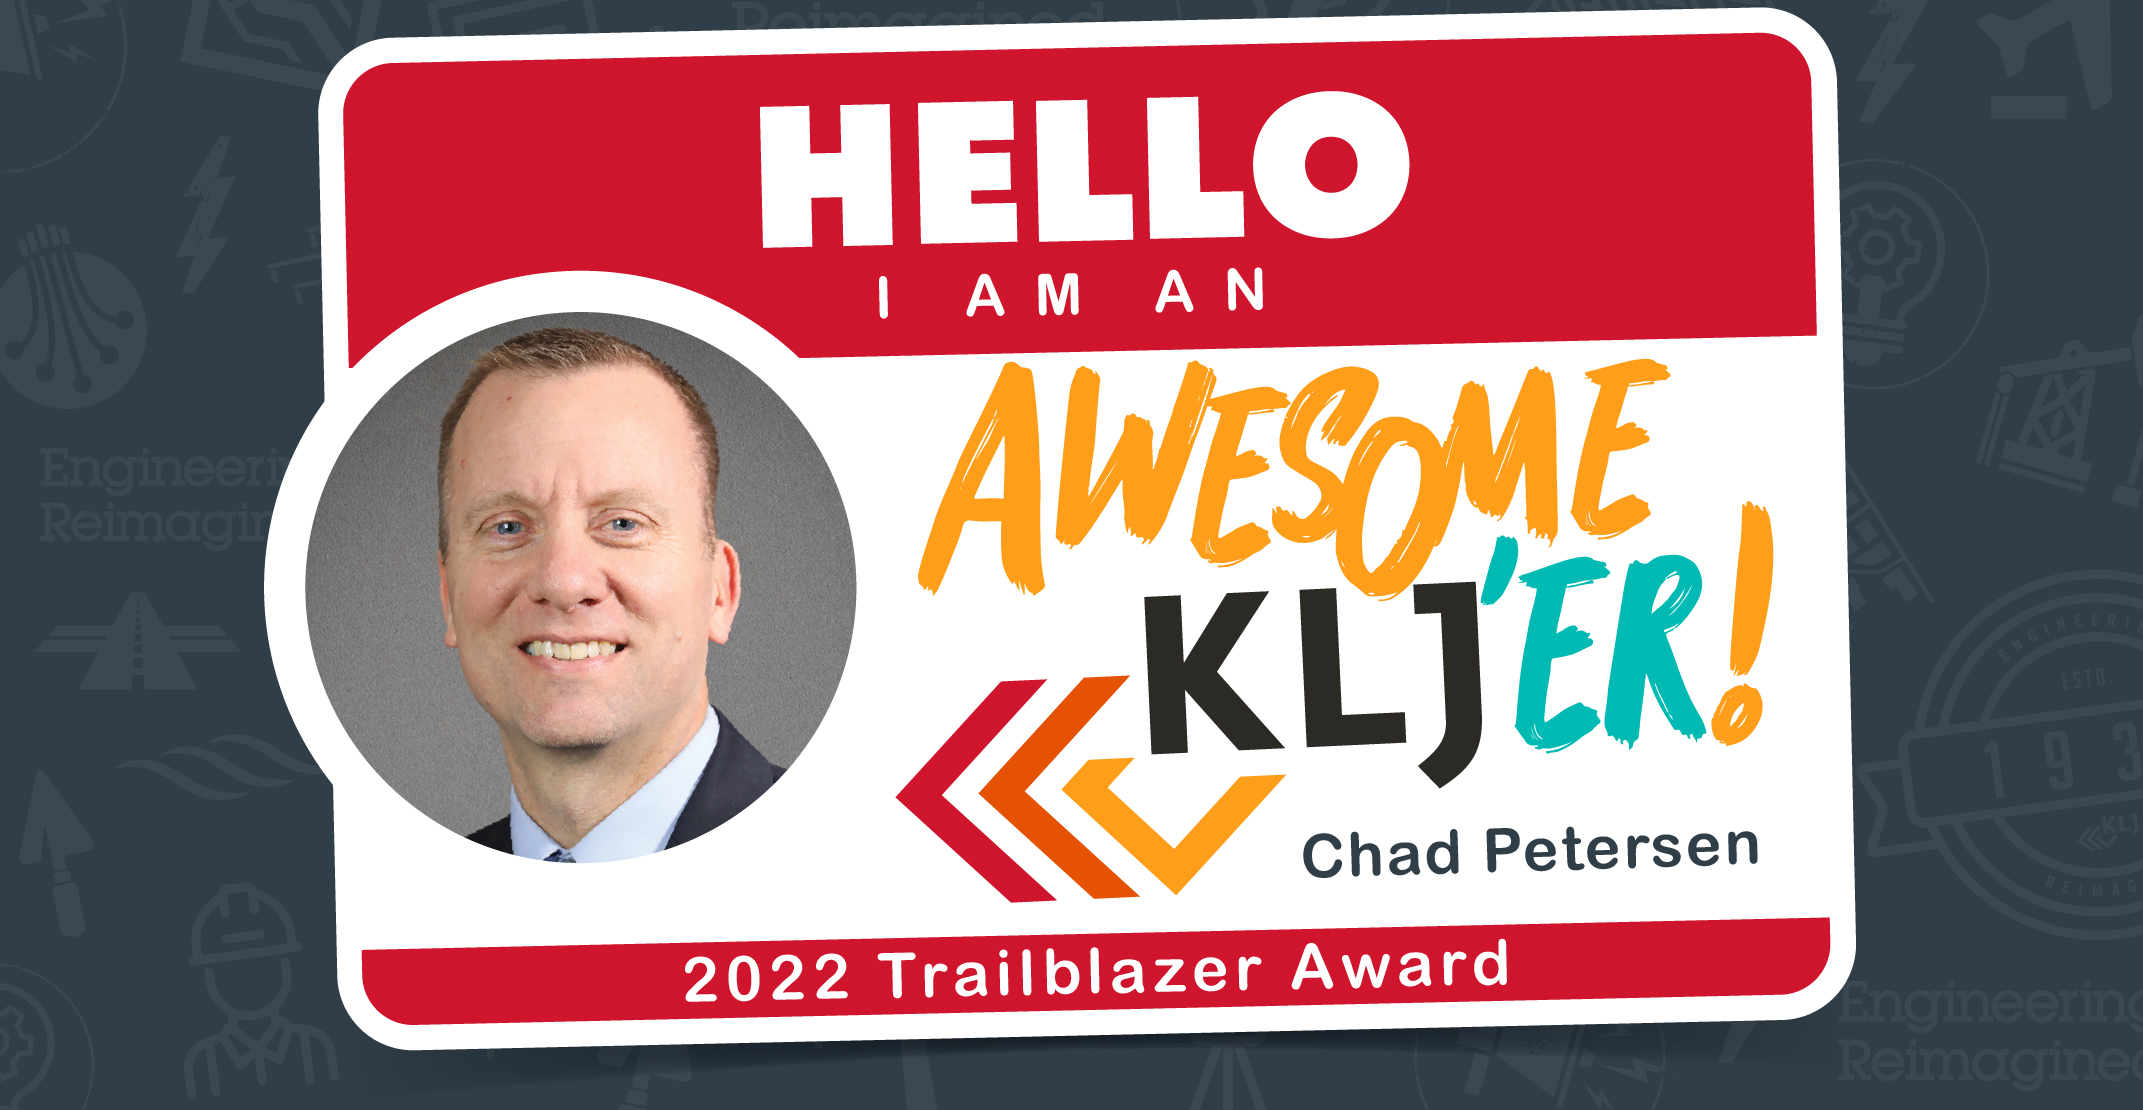 KLJ's Chad Petersen Earns Trailblazer Award